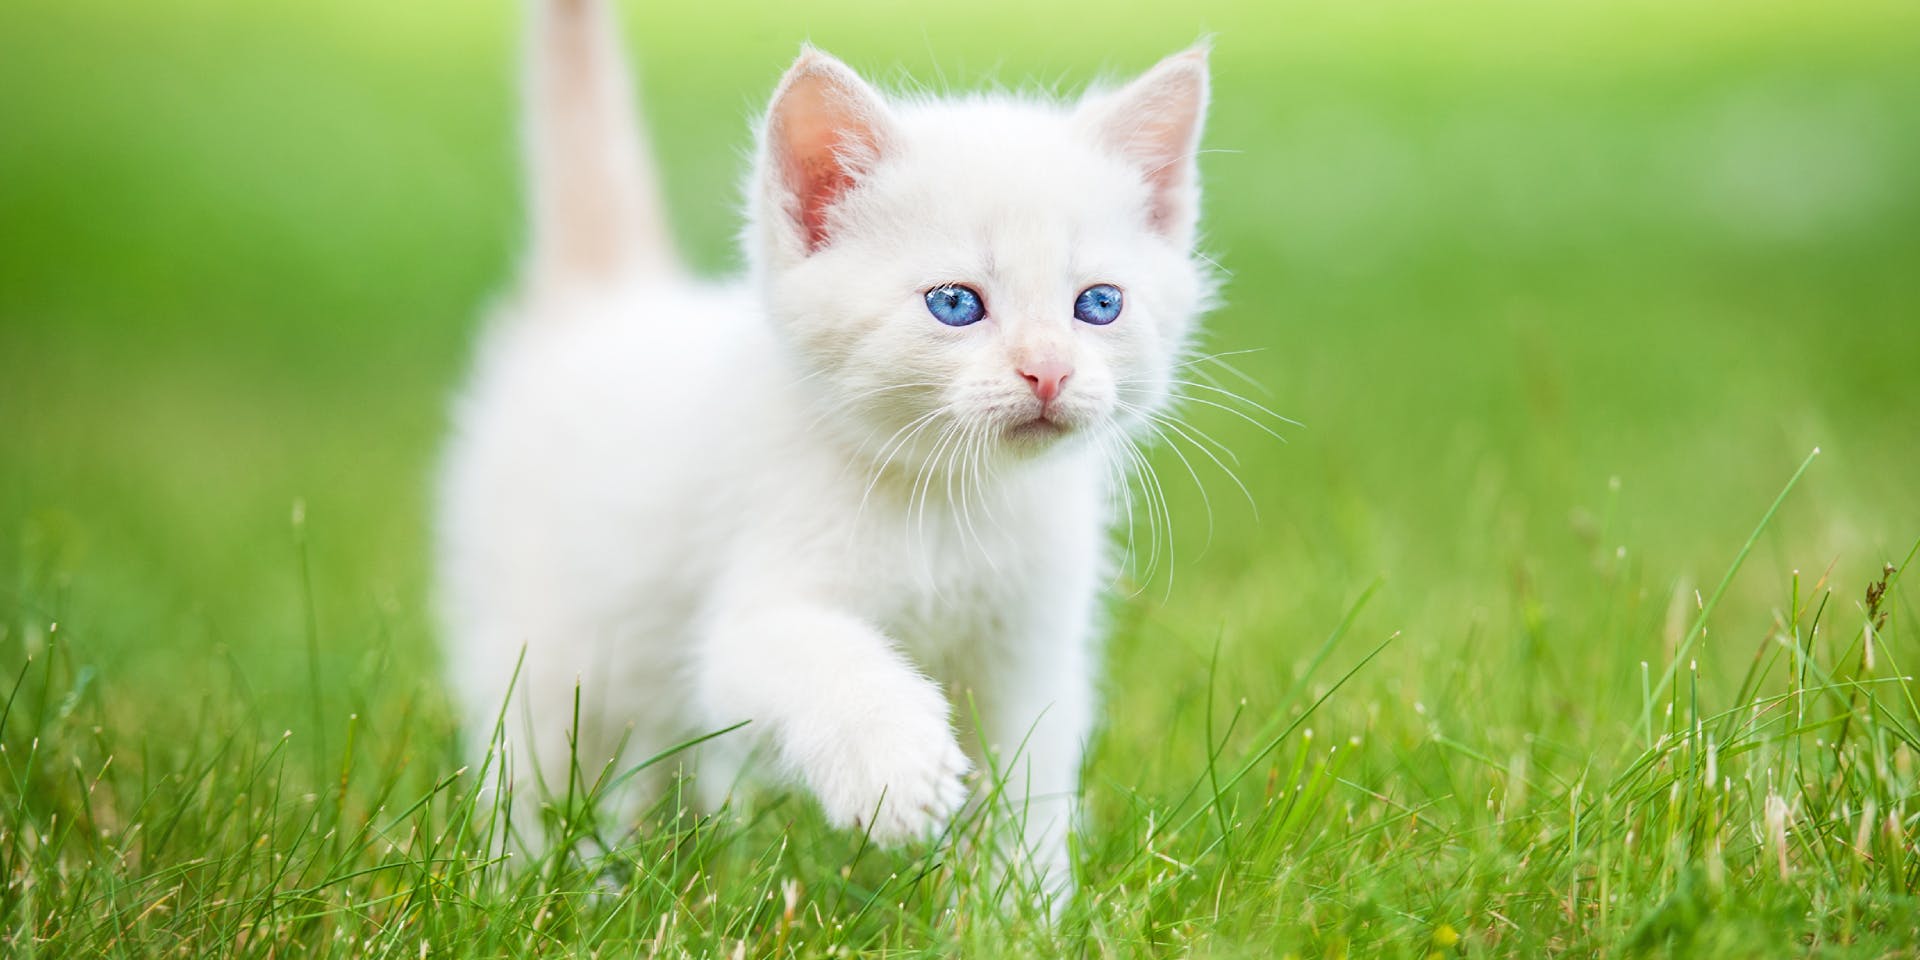 A fluffy white kitten walking on the grass.